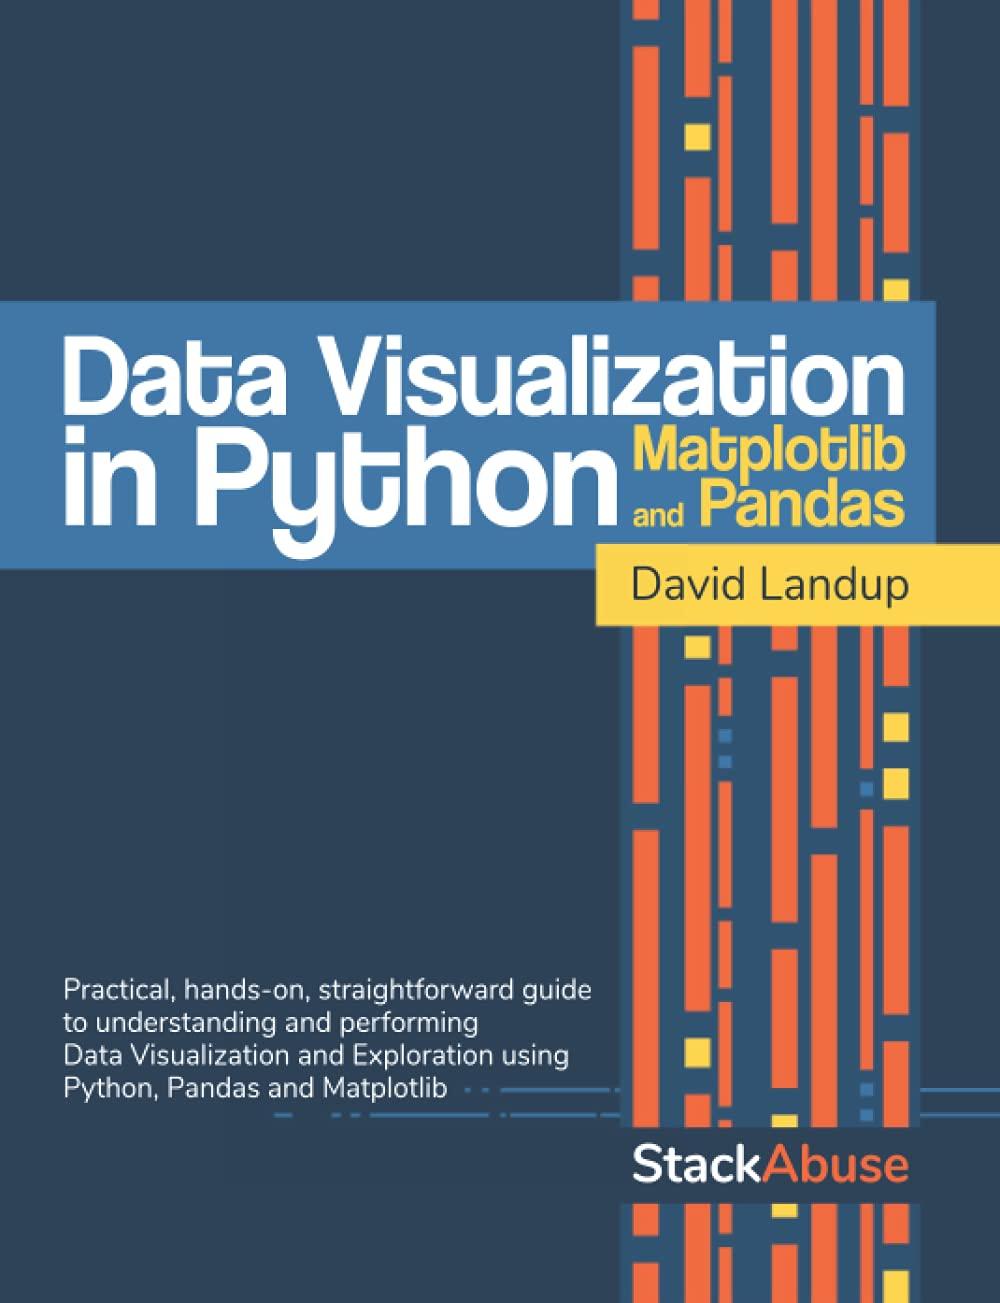 data visualization in python with pandas and matplotlib 1st edition david landup b0972tfyn8, 979-8521342877